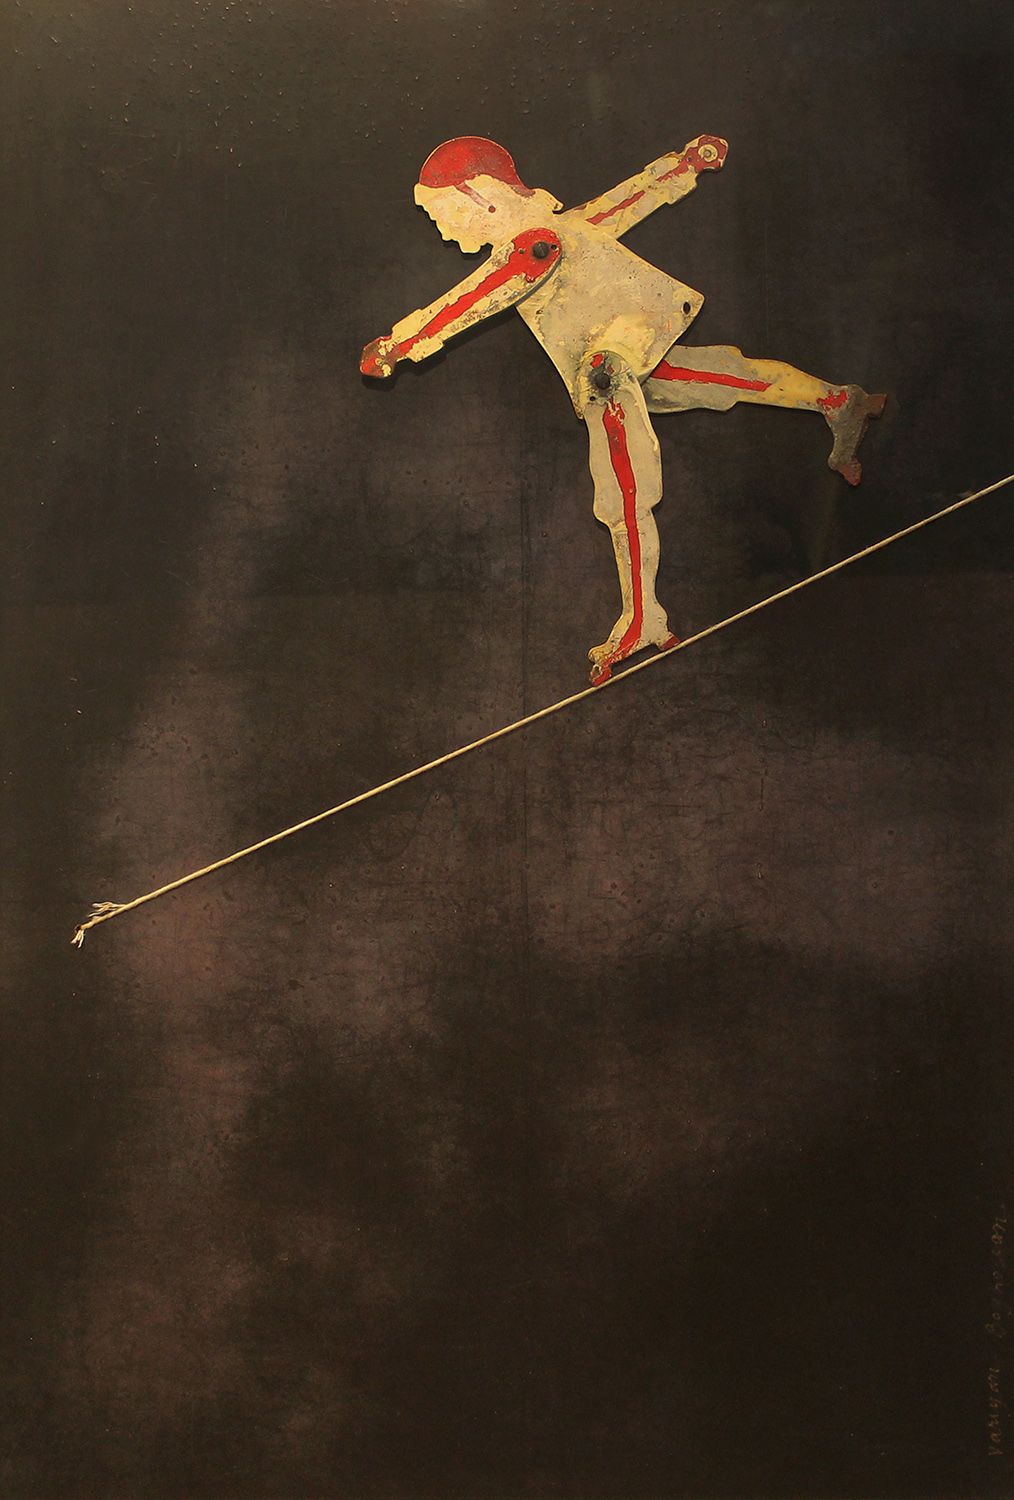 Tight Rope Walker (c. 2000)